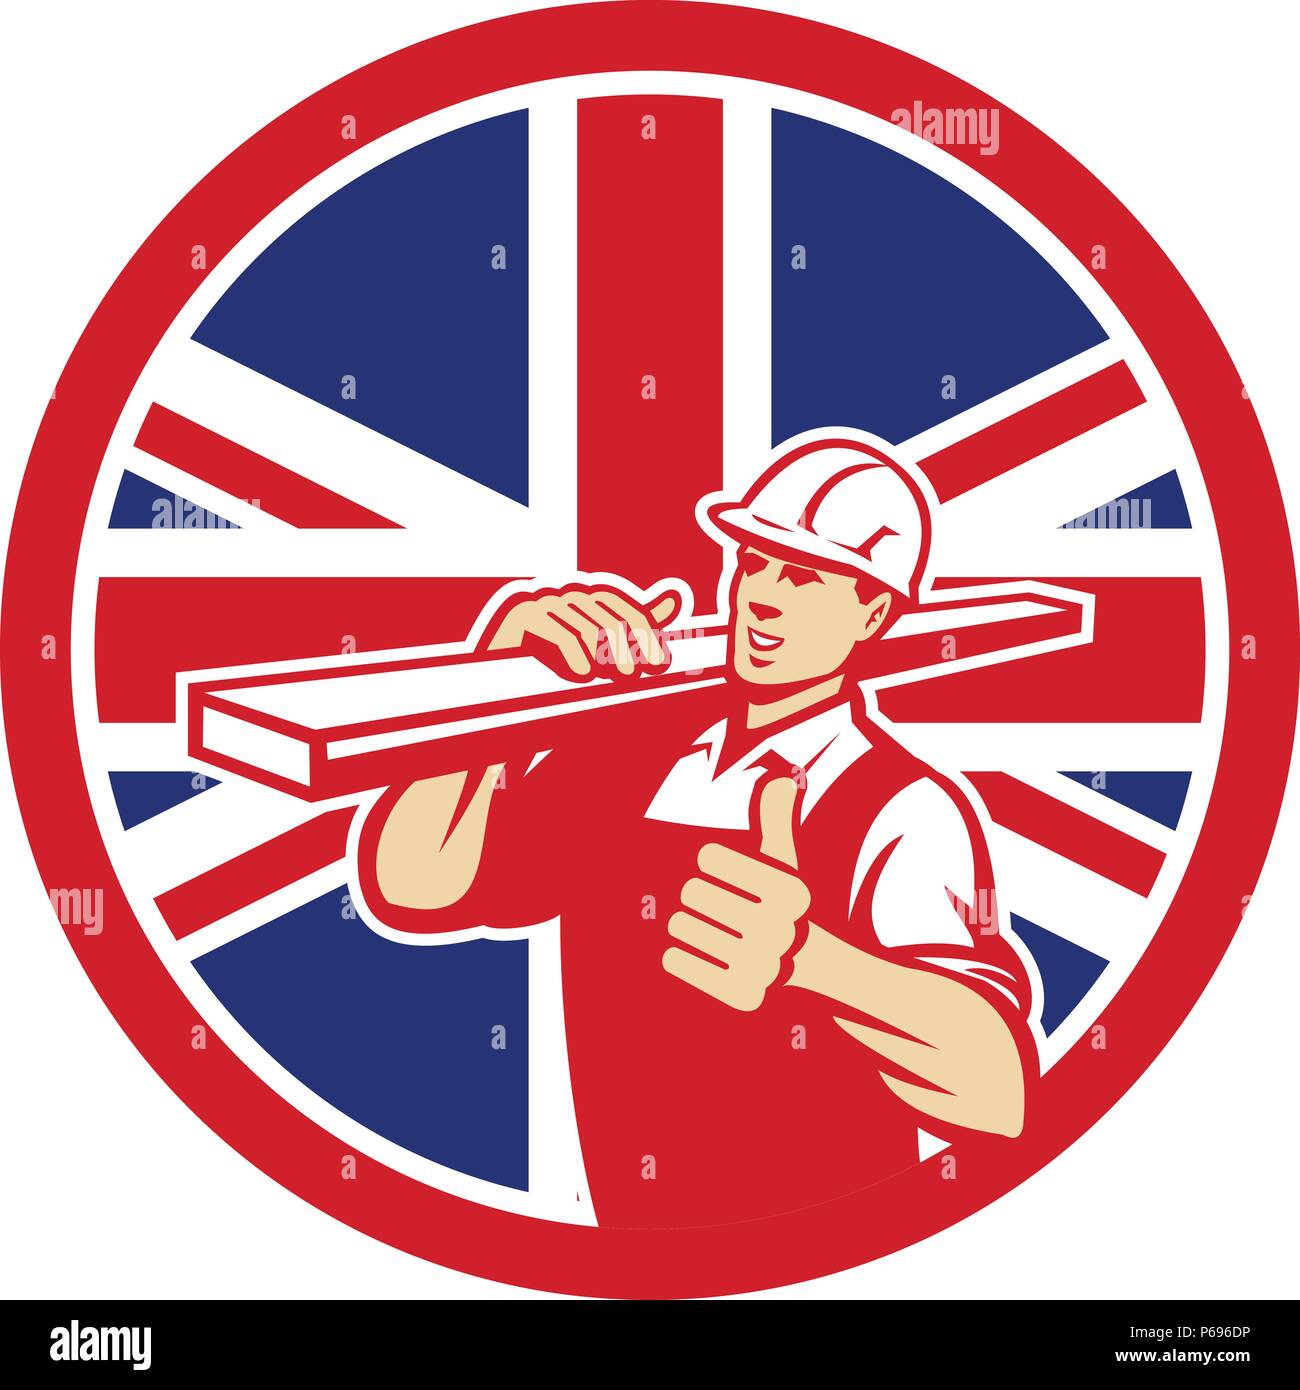 Icon retro style illustration of a British lumber yard or lumberyard worker thumbs up with United Kingdom UK, Great Britain Union Jack flag set inside Stock Vector